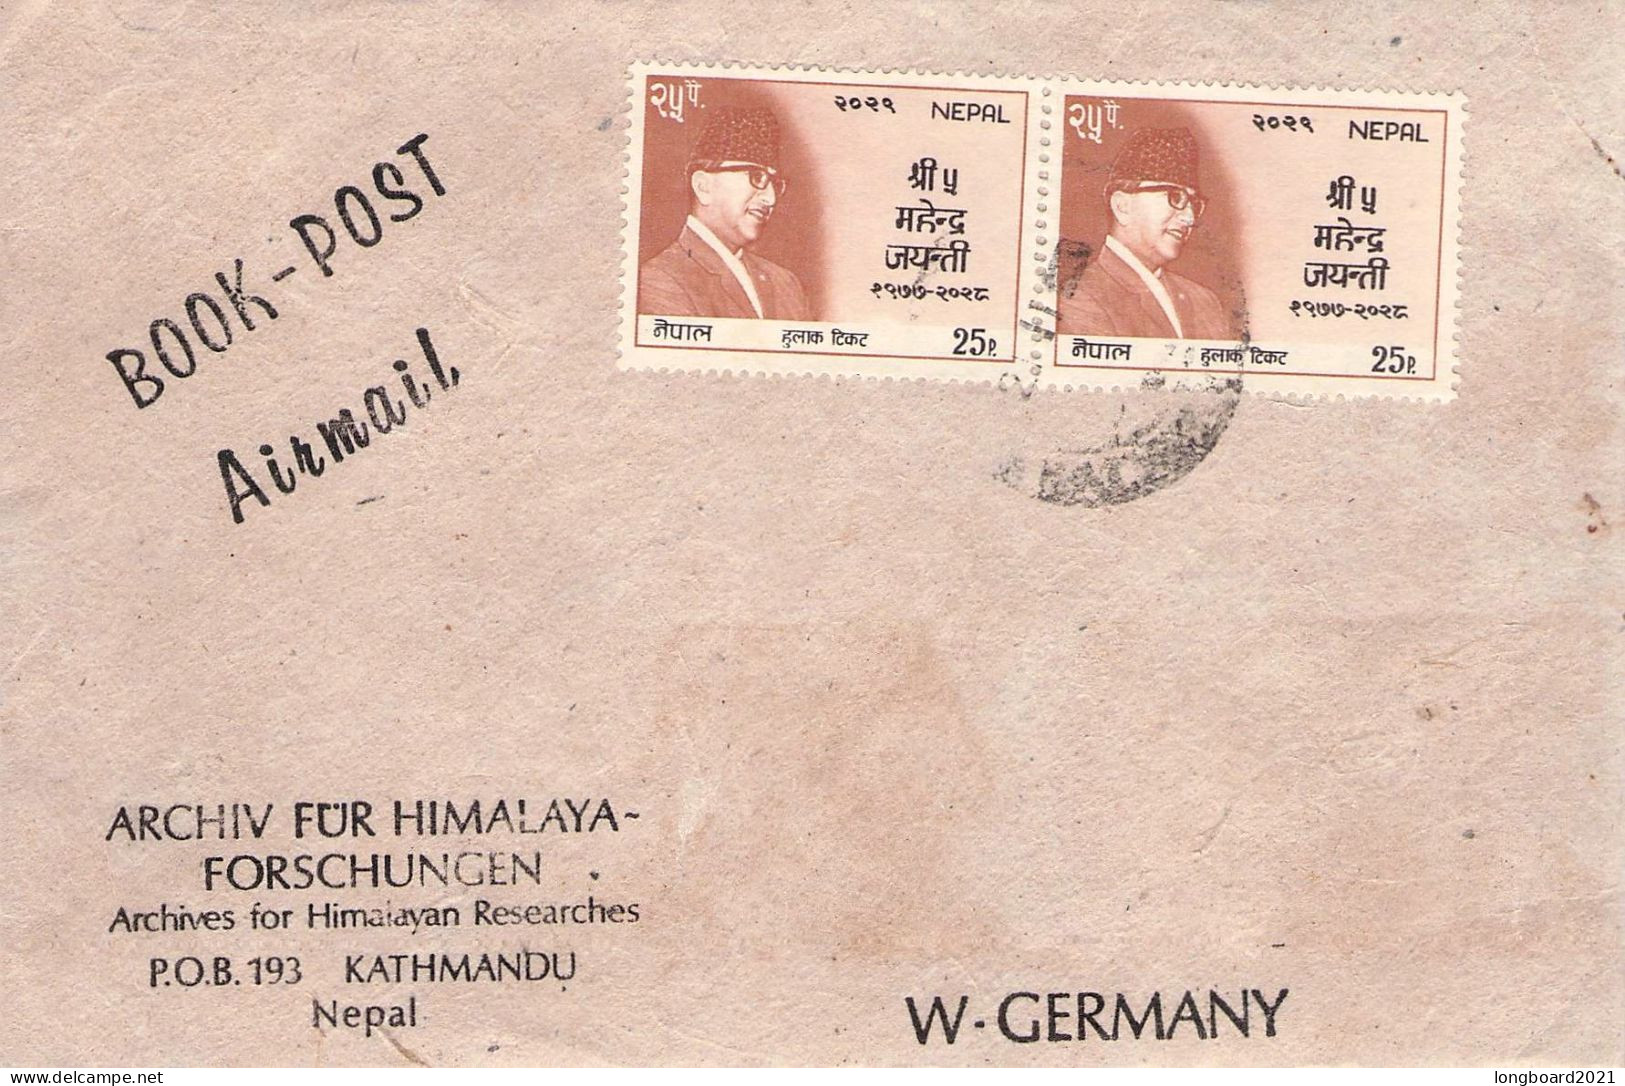 NEPAL - BOOK POST AIRMAIL - GERMANY / 7024 - Népal